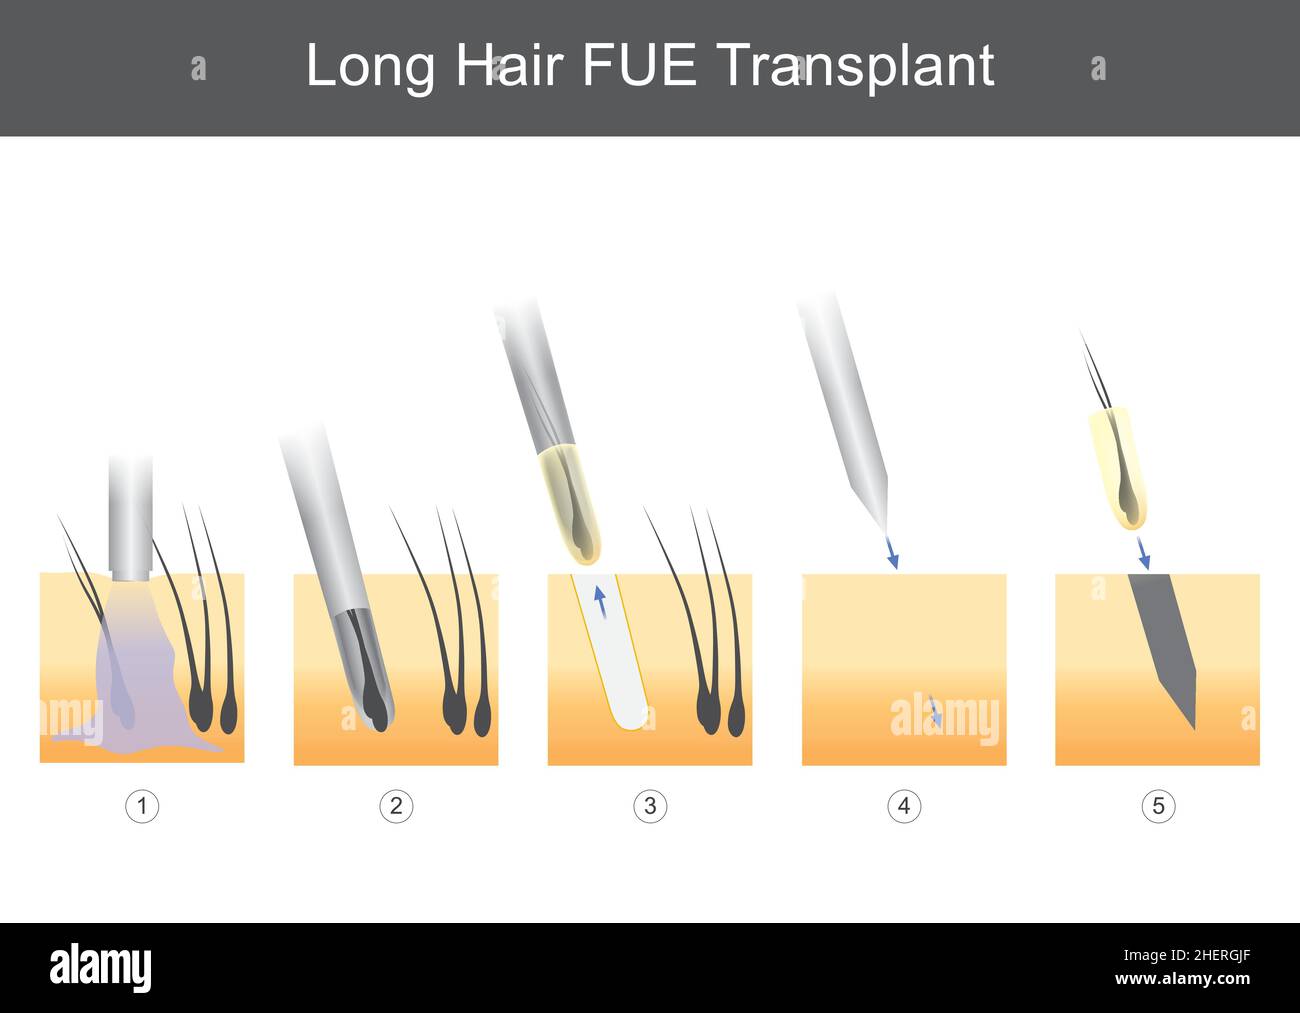 Long Hair FUE Transplant. Illustration for medical showing technical steps of hair transplantation. Stock Vector